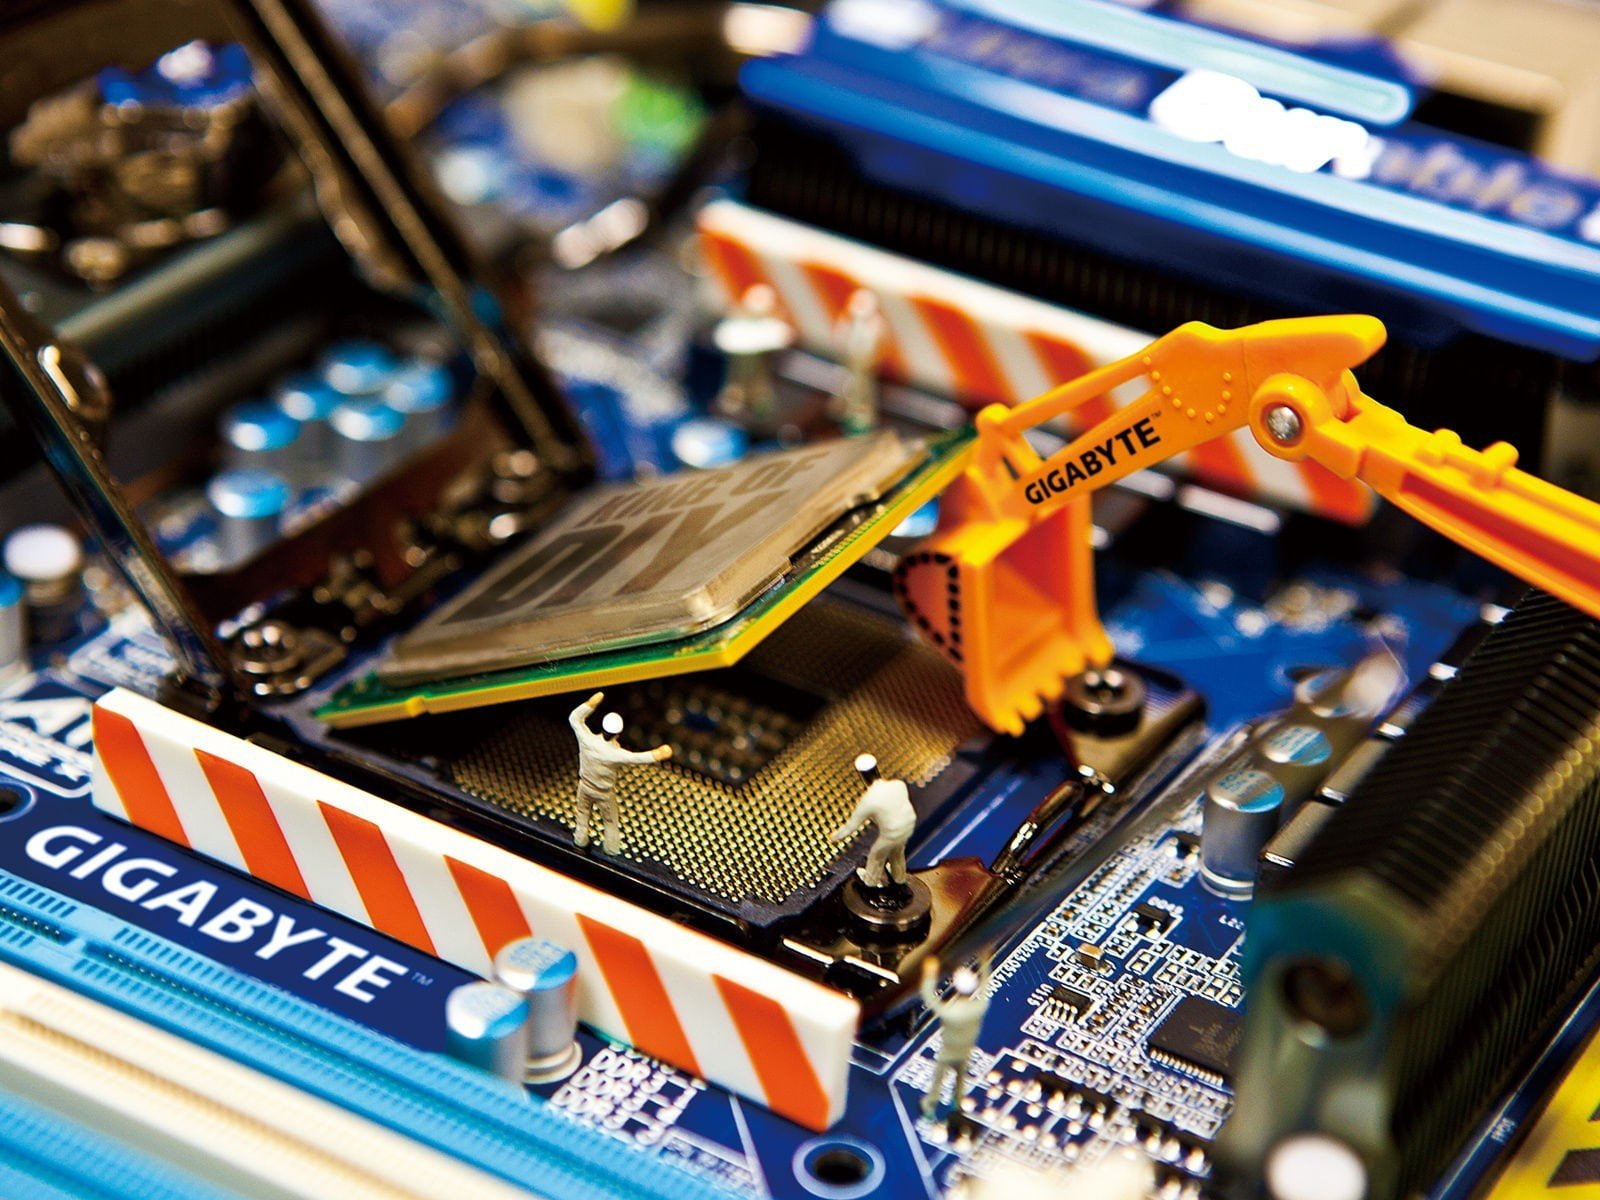 intel work gigabyte ultra durable computer socket microchip capacitors motherboards